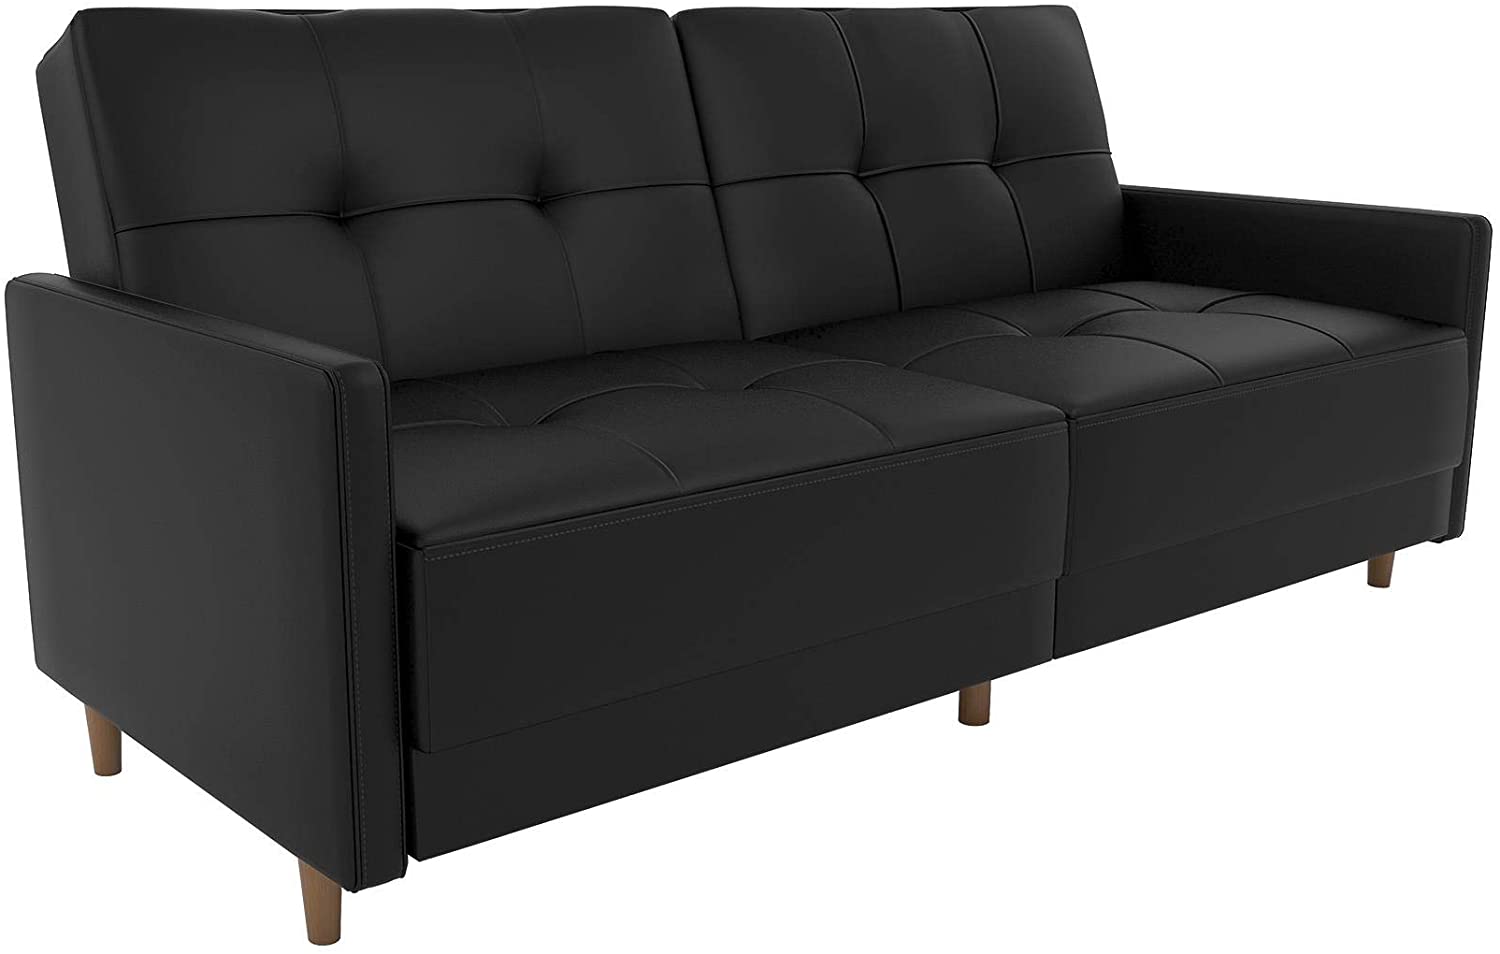 Mintwud Black Kobe Single Futon Sofa cum Bed, Size: Contemporary, Model  Name/Number: FN1751032-P-WH9065 at Rs 20000 in Kolkata